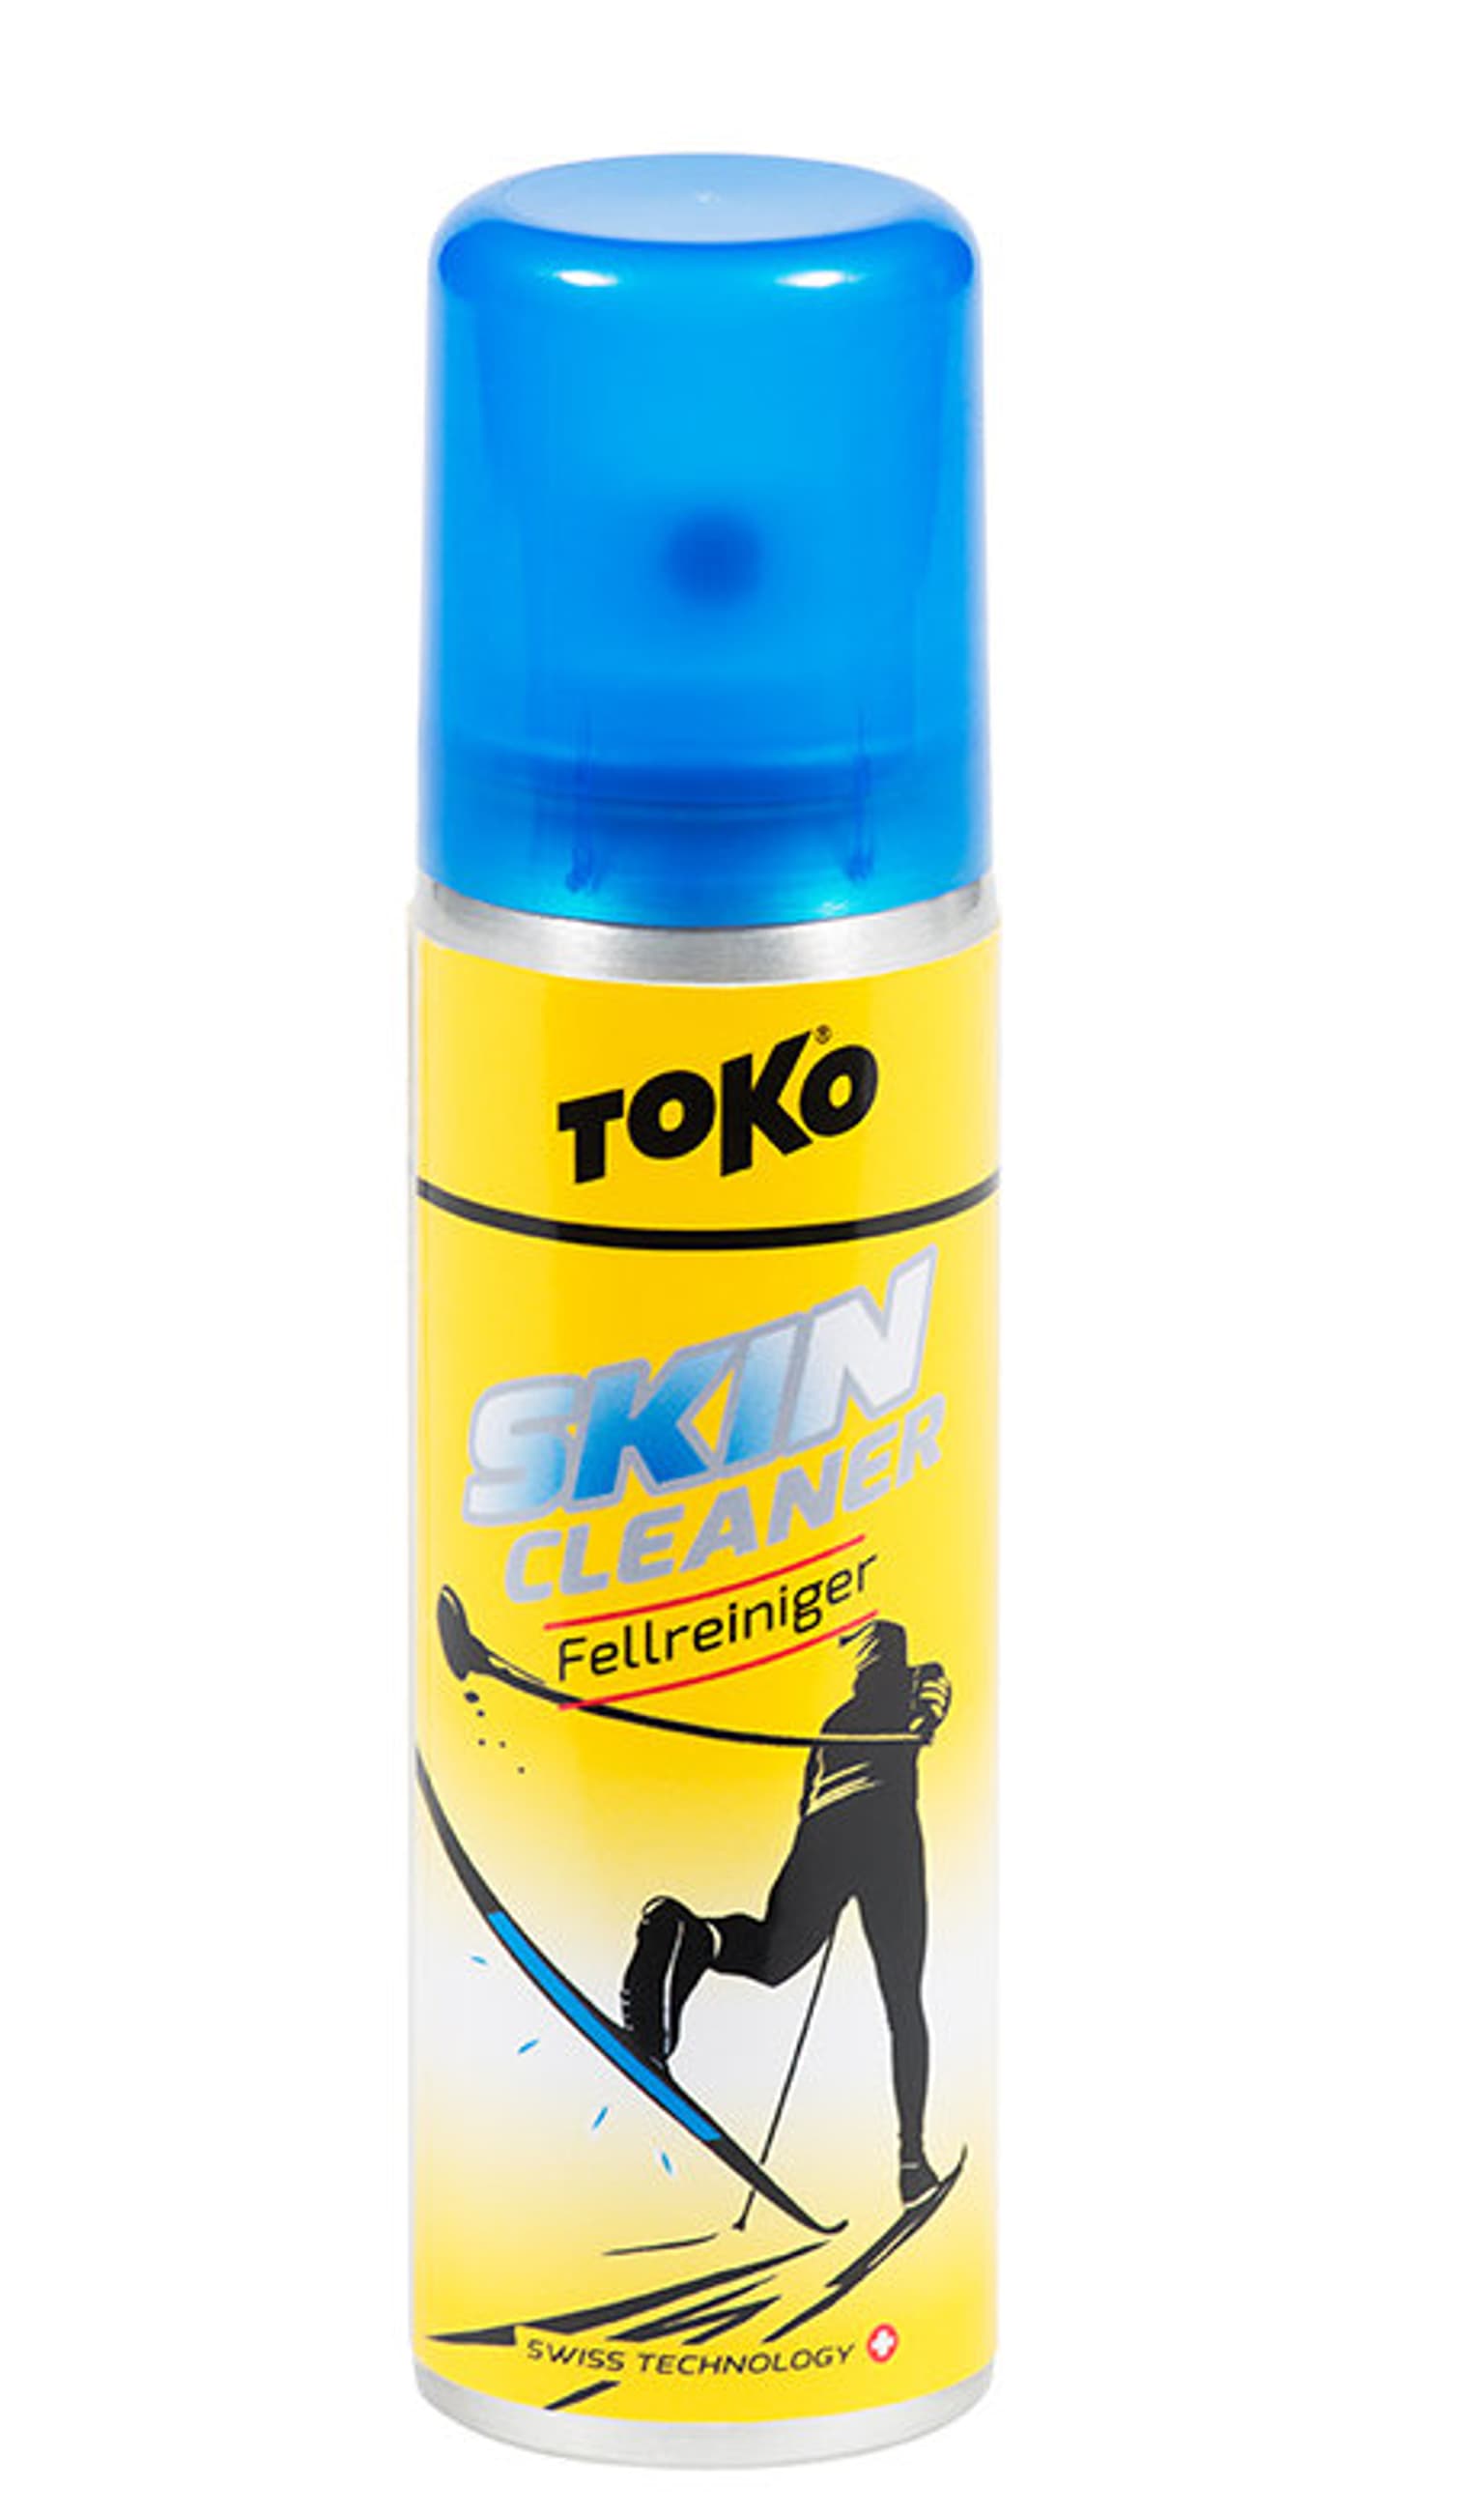 Toko Toko Skin-Cleaner Fellreiniger 1